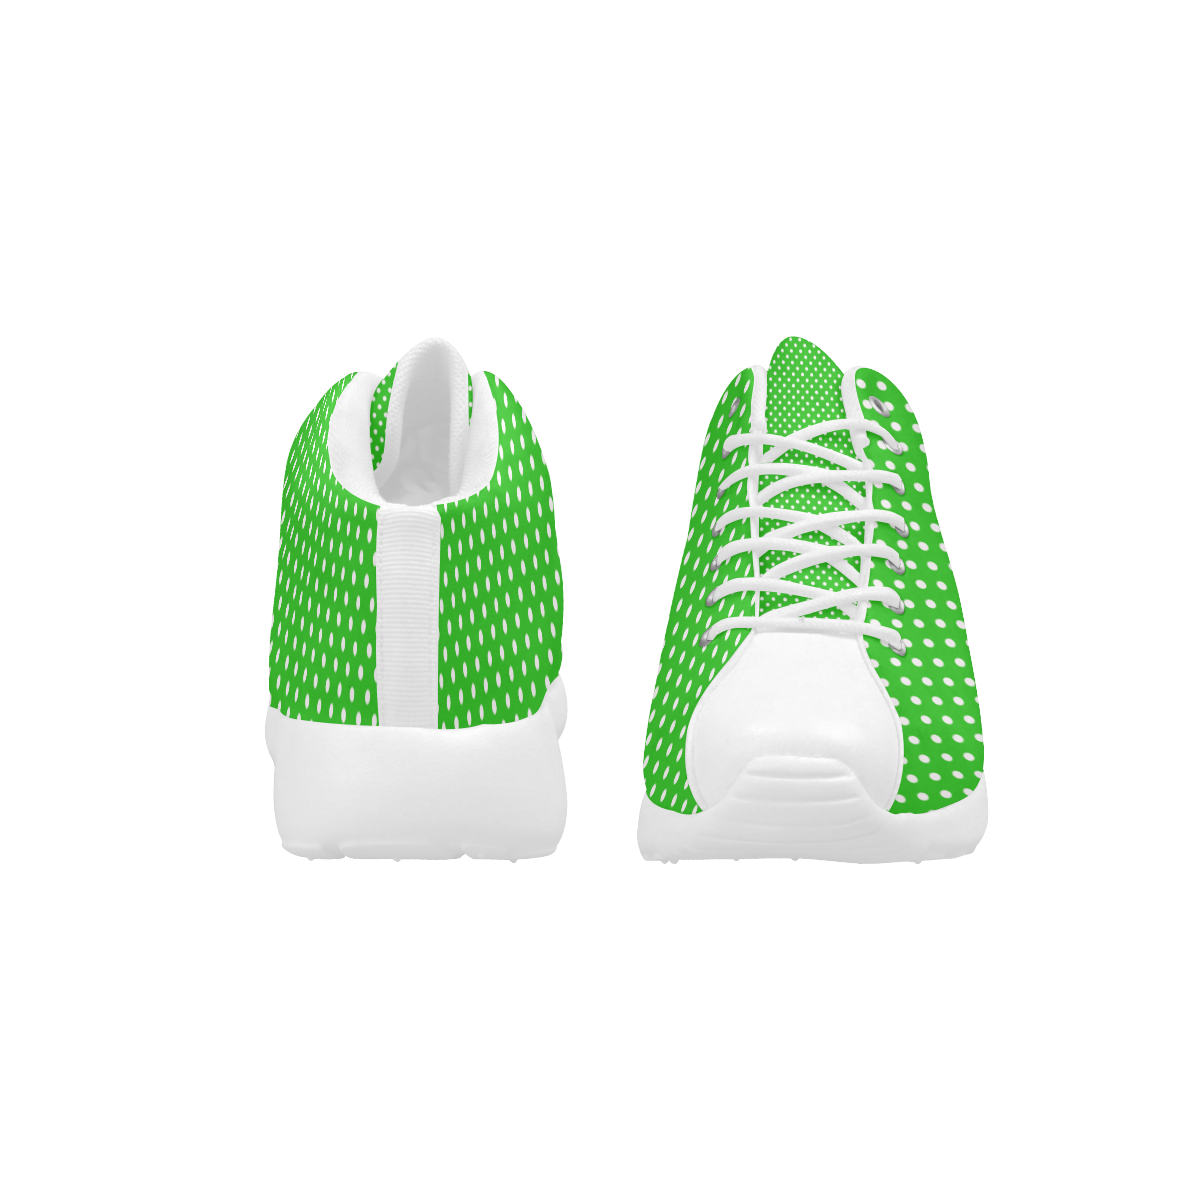 Green polka dots Women's Basketball Training Shoes (Model 47502)